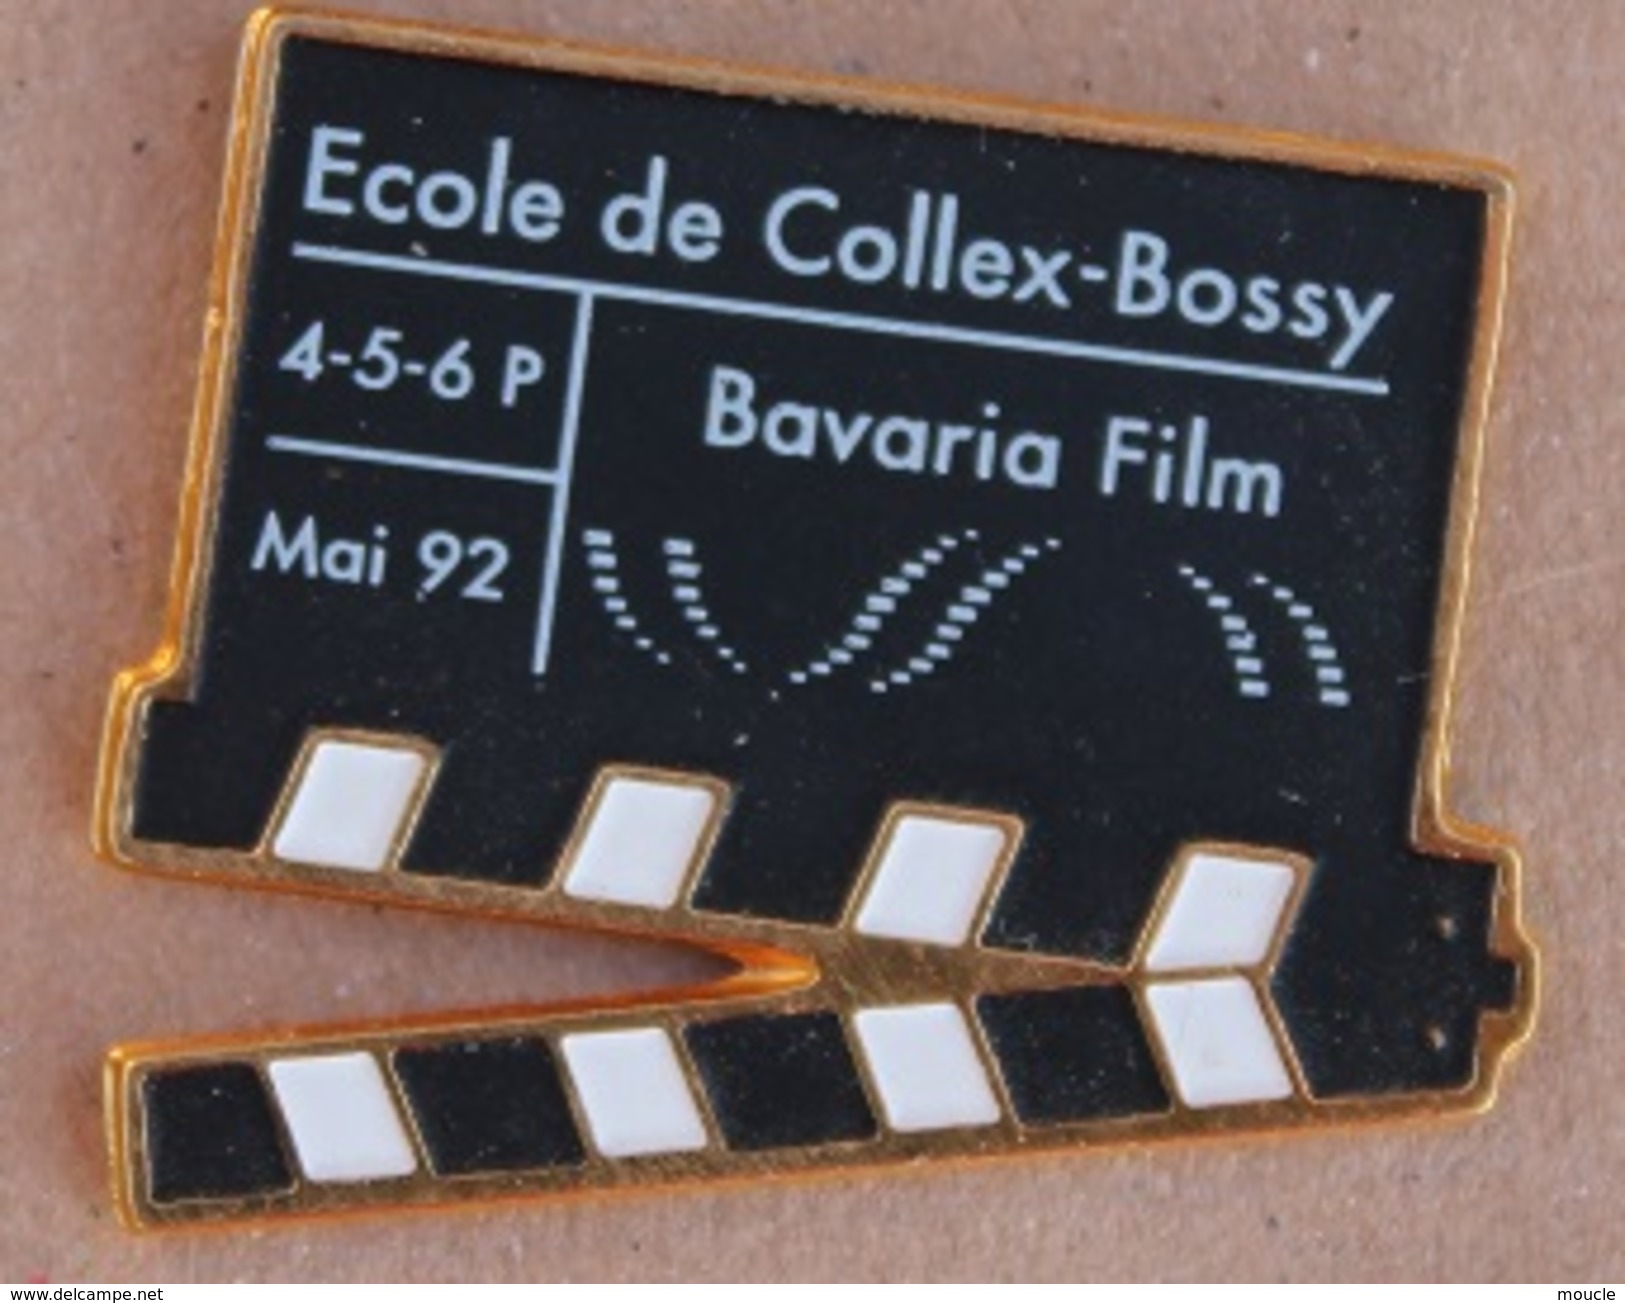 CLAP DE REALISATEUR - CINEMA - FILM - ECOLE DE COLLEY-BOSSY - GENEVE - SUISSE - BAVARIA FILM - MAI 92   -  (17) - Filmmanie